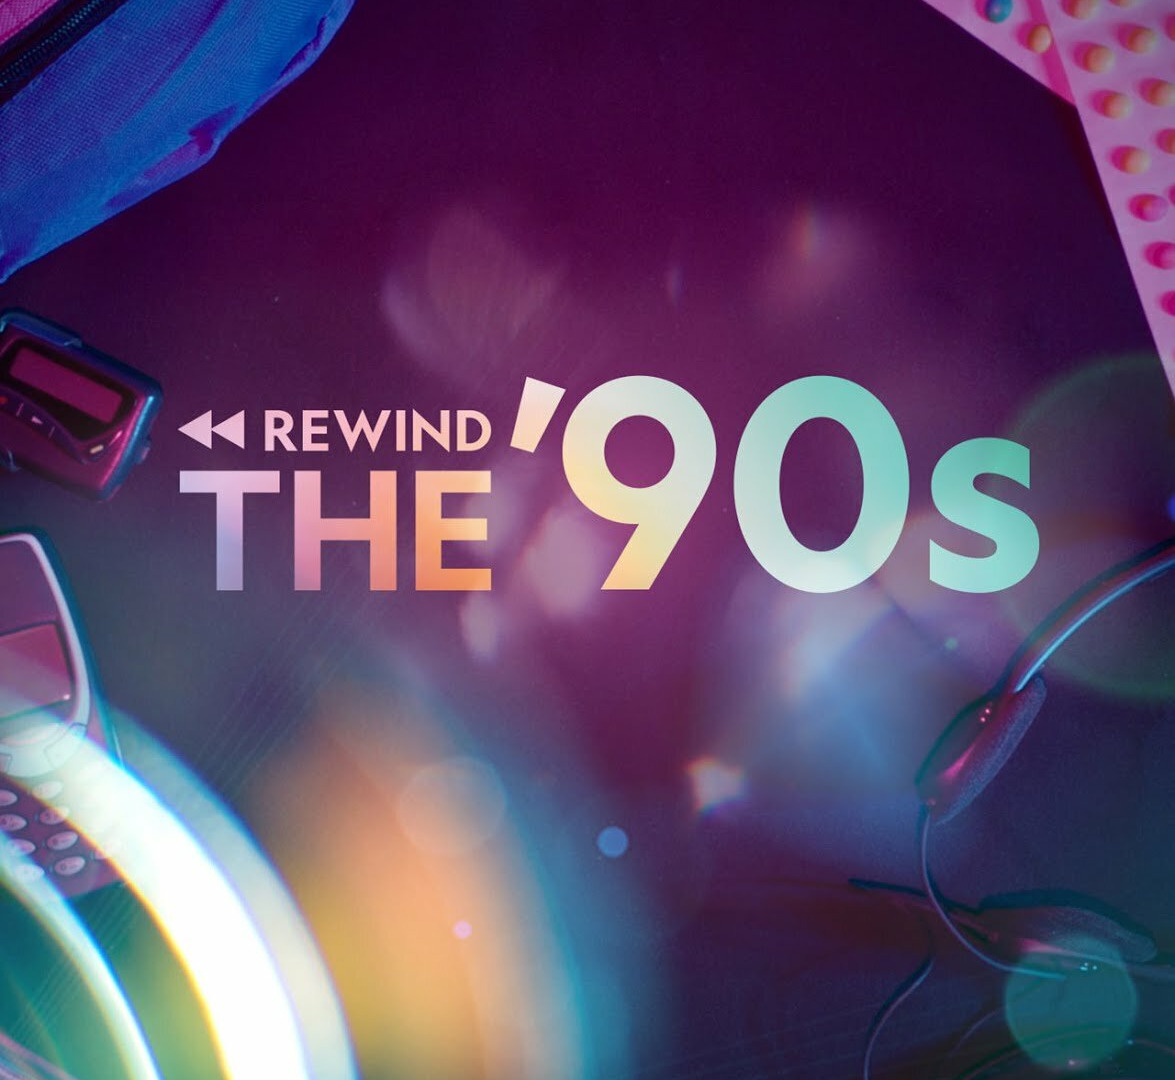 Show Rewind the '90s